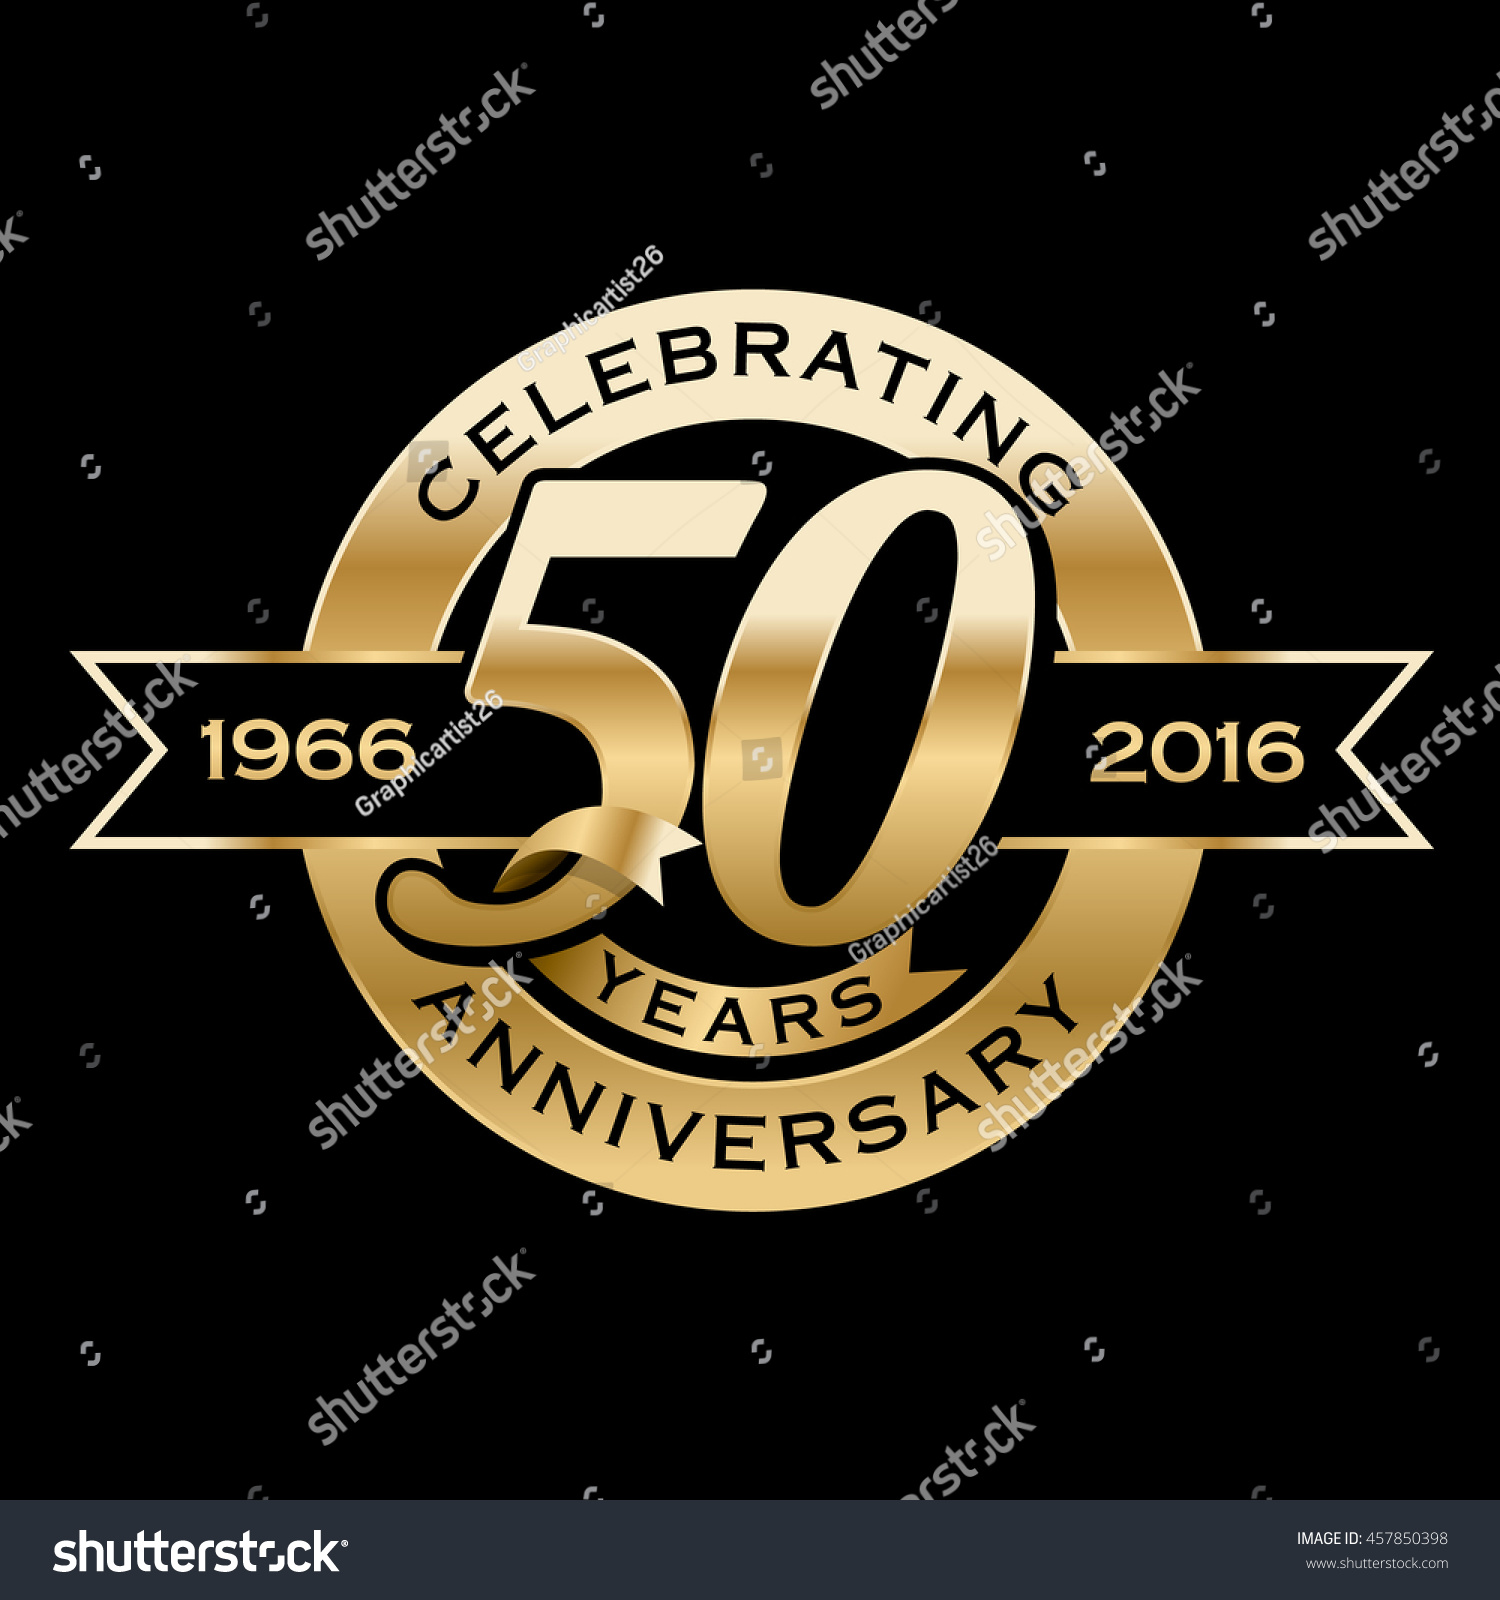 SVG of Celebrating 50th Years Anniversary svg